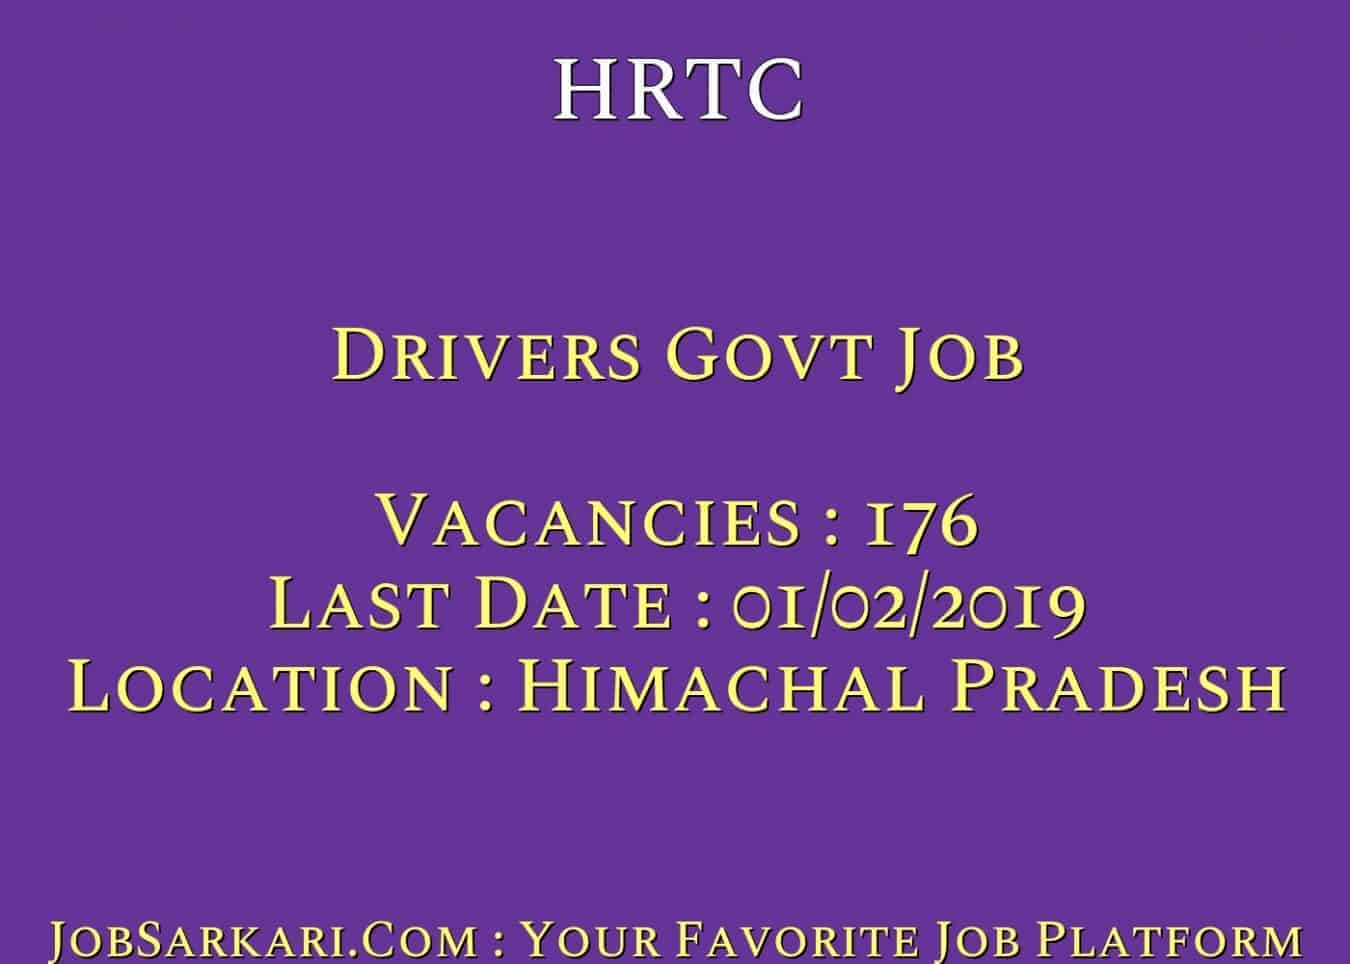 HRTC Recruitment 2019 For Drivers Govt Job